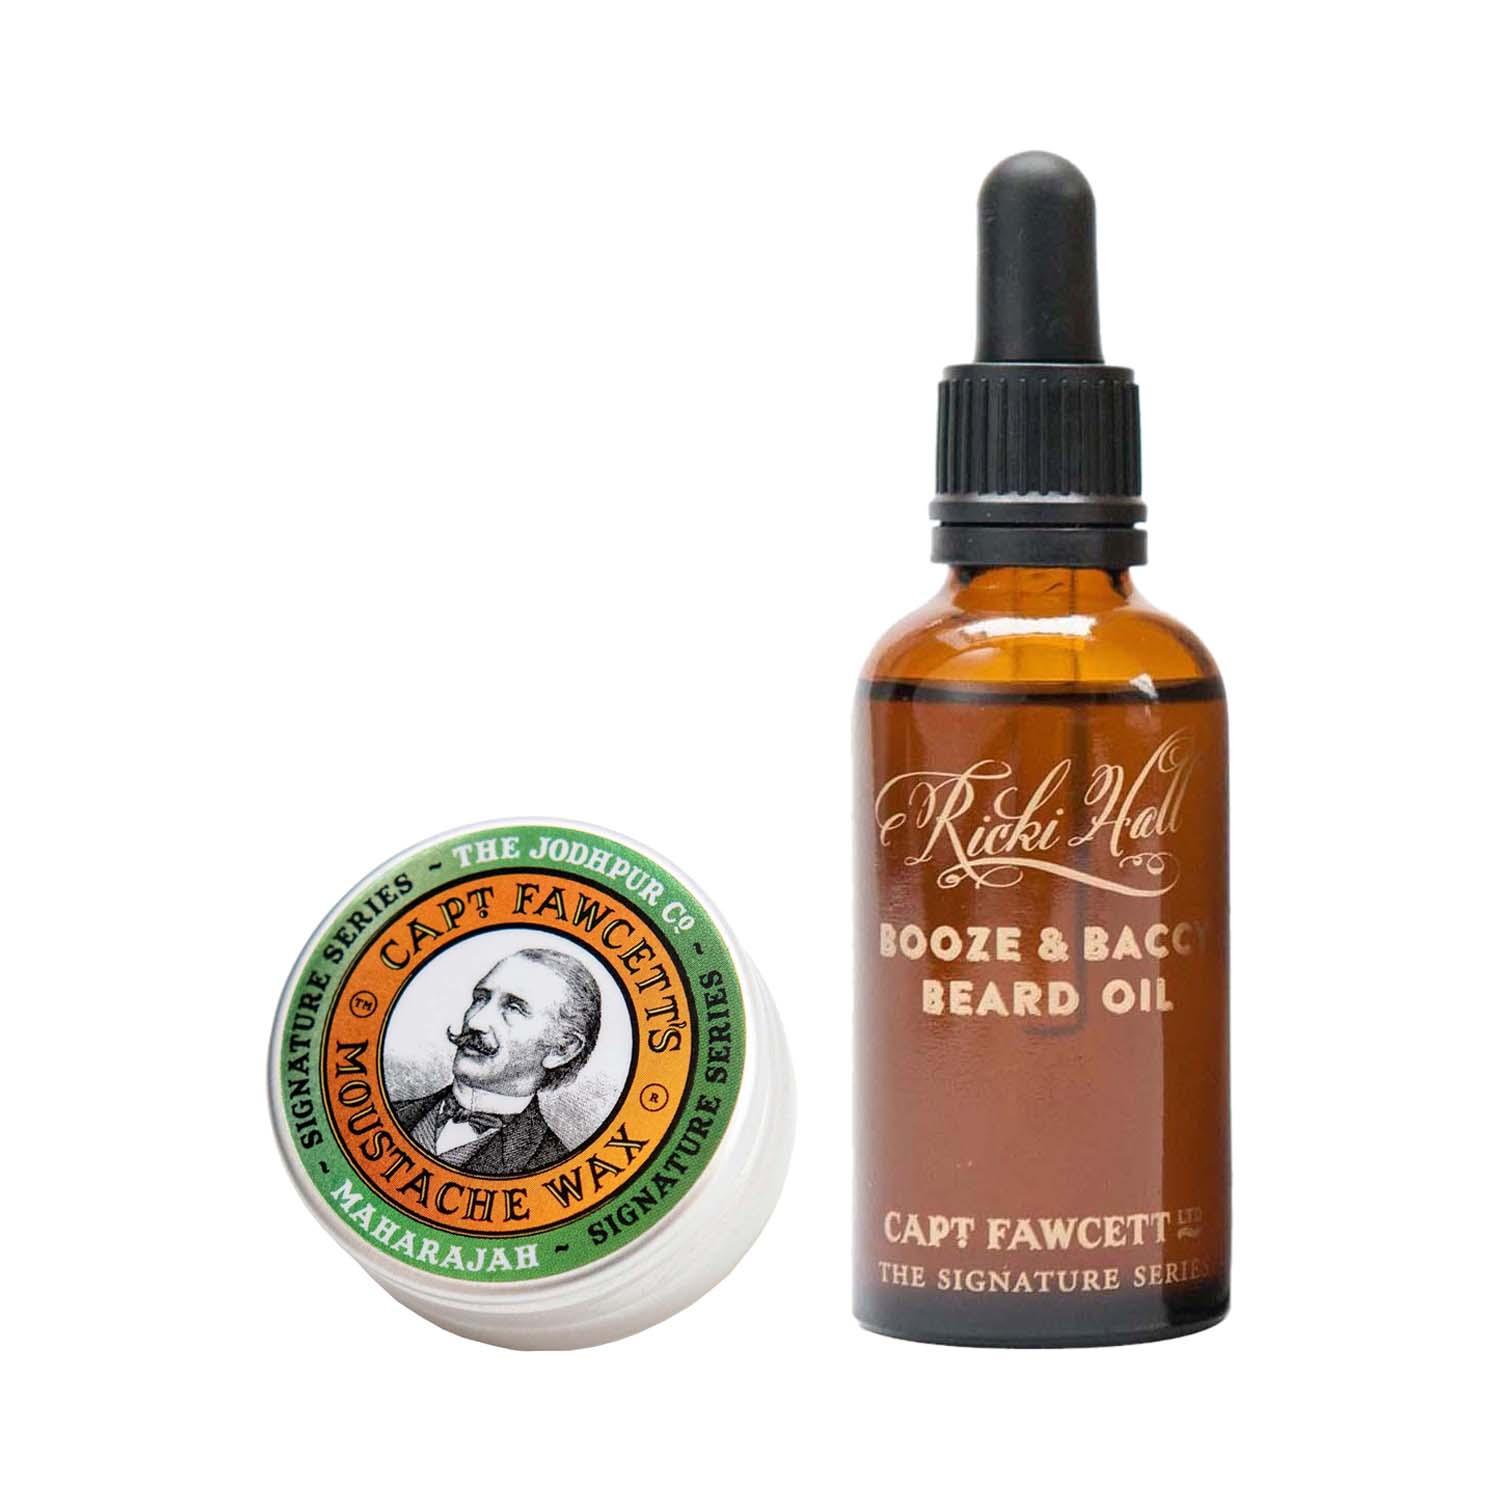 Captain Fawcett | Captain Fawcett Maharajah Moustache Wax for Men & Ricki Hall's Booze & Baccy Beard Oil Combo